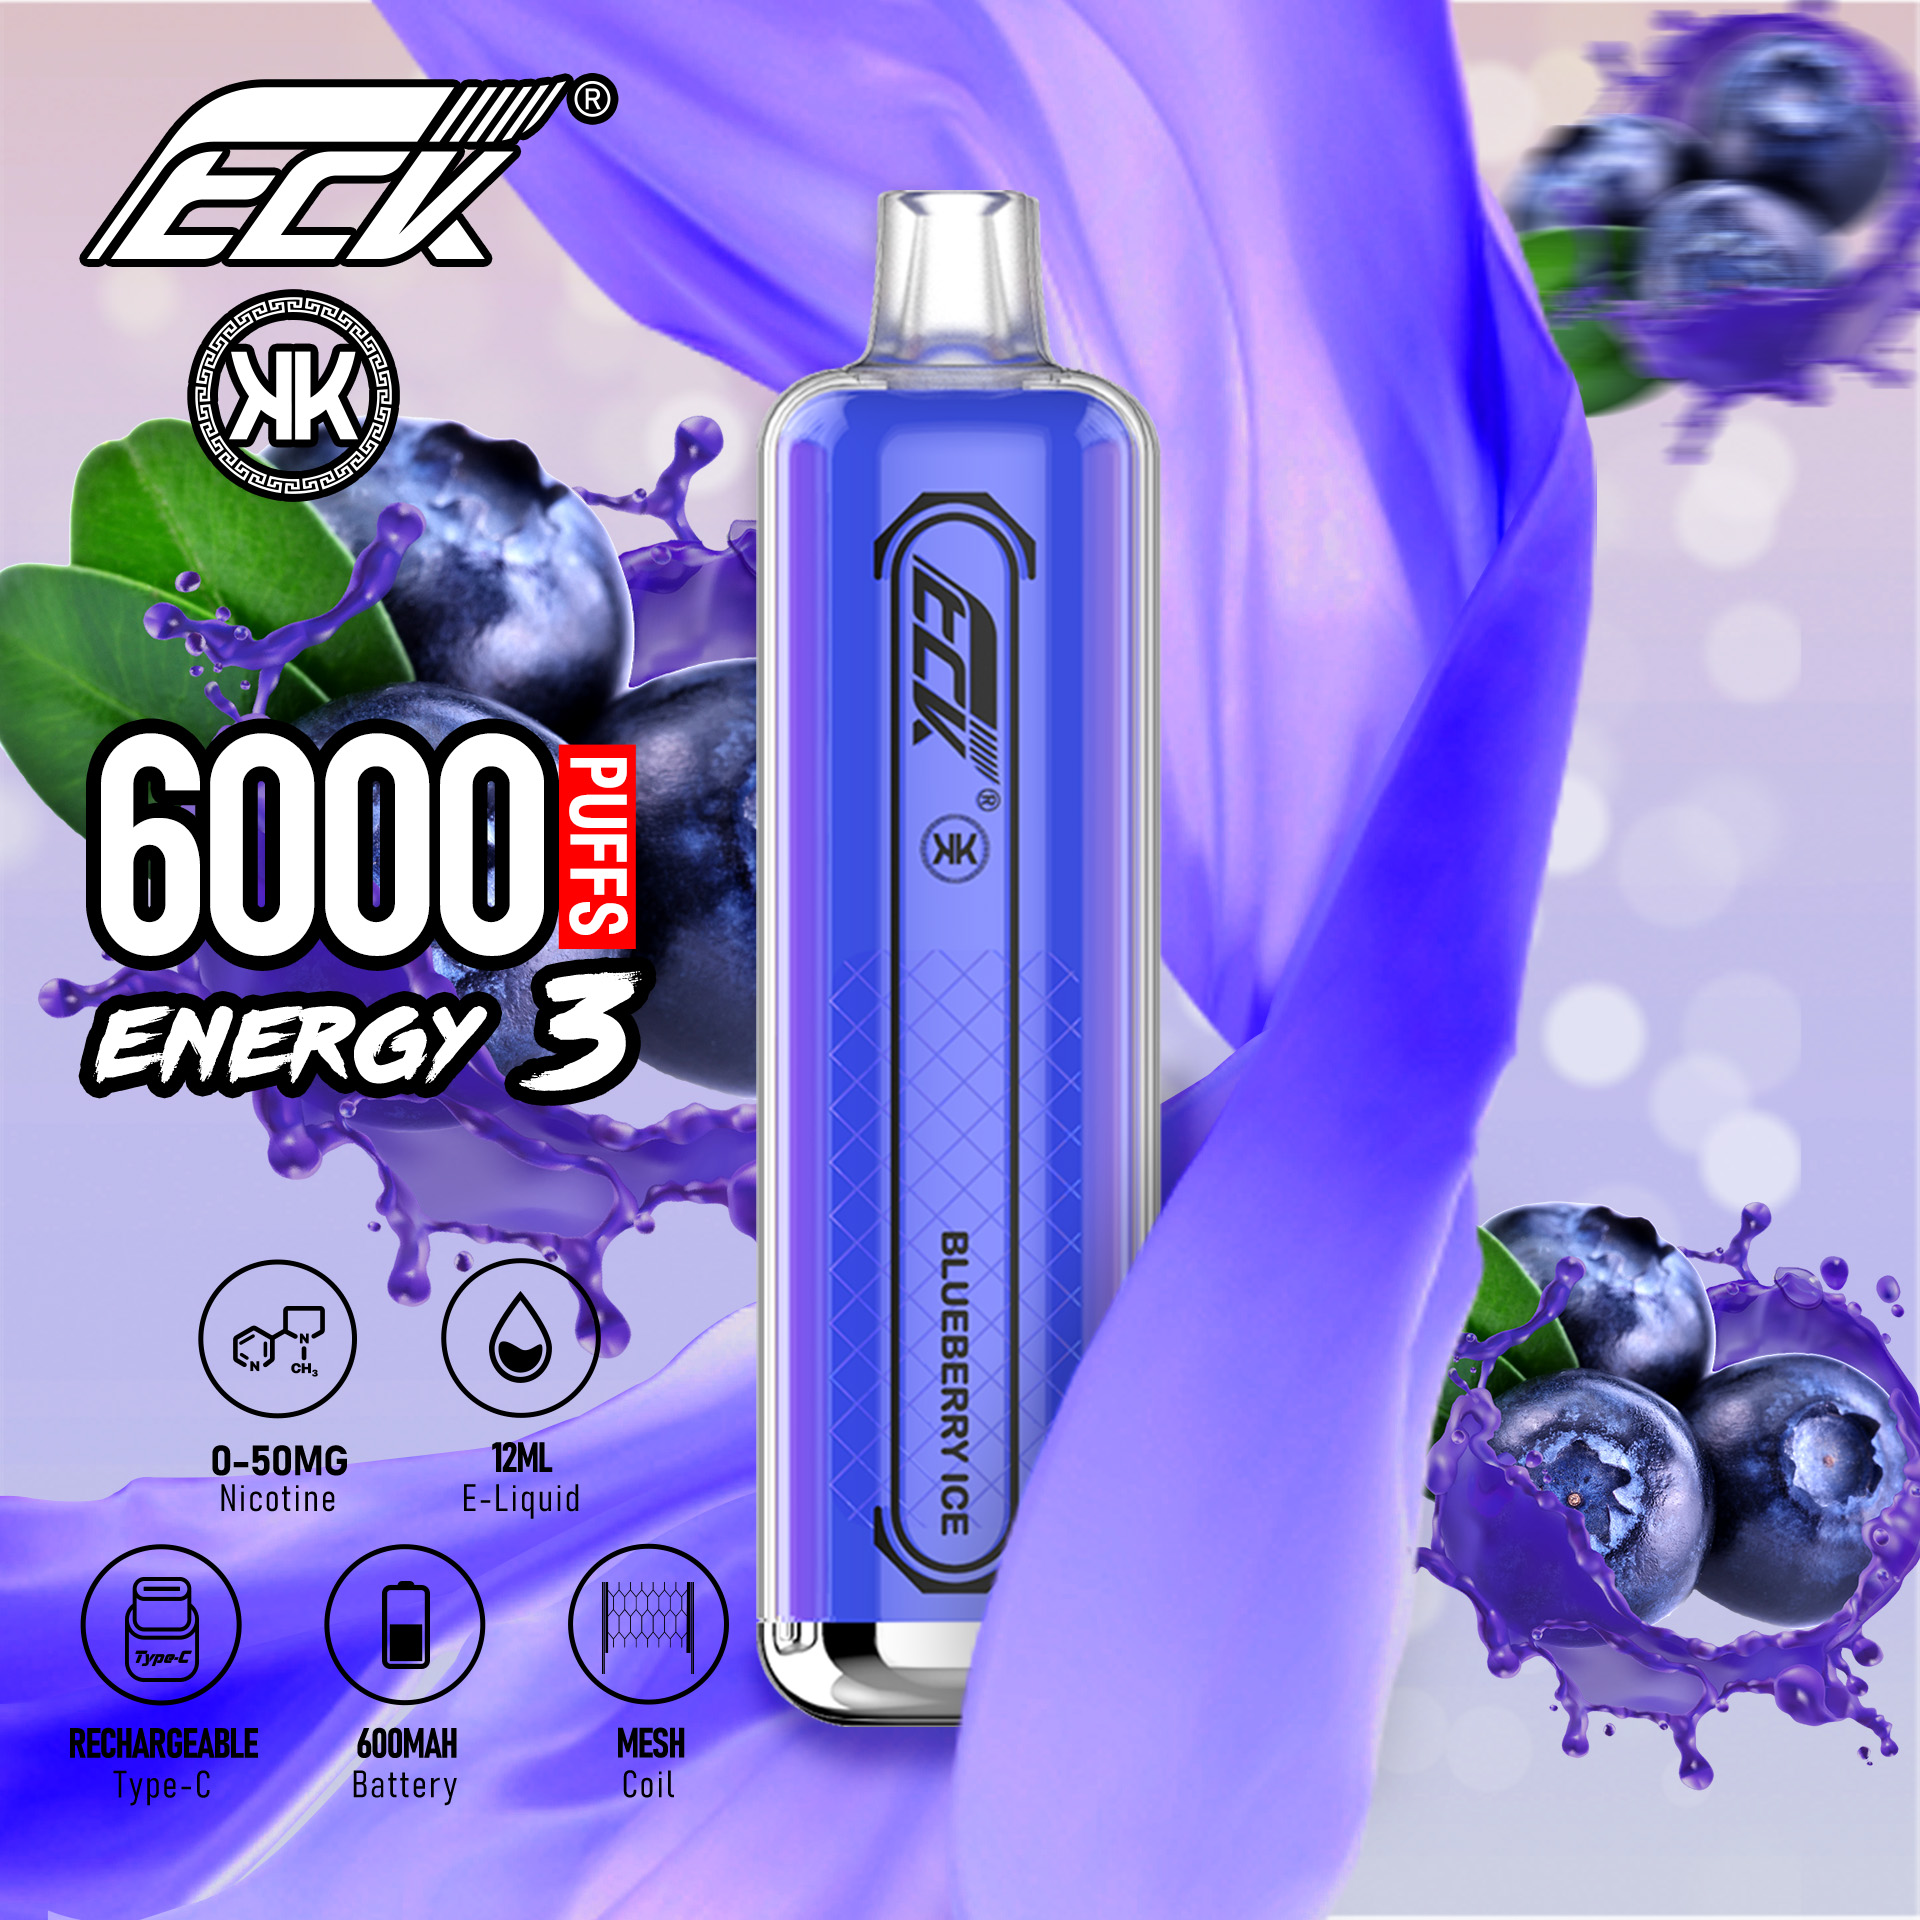 KK vape energy 3 disposable vape 6000 puffs